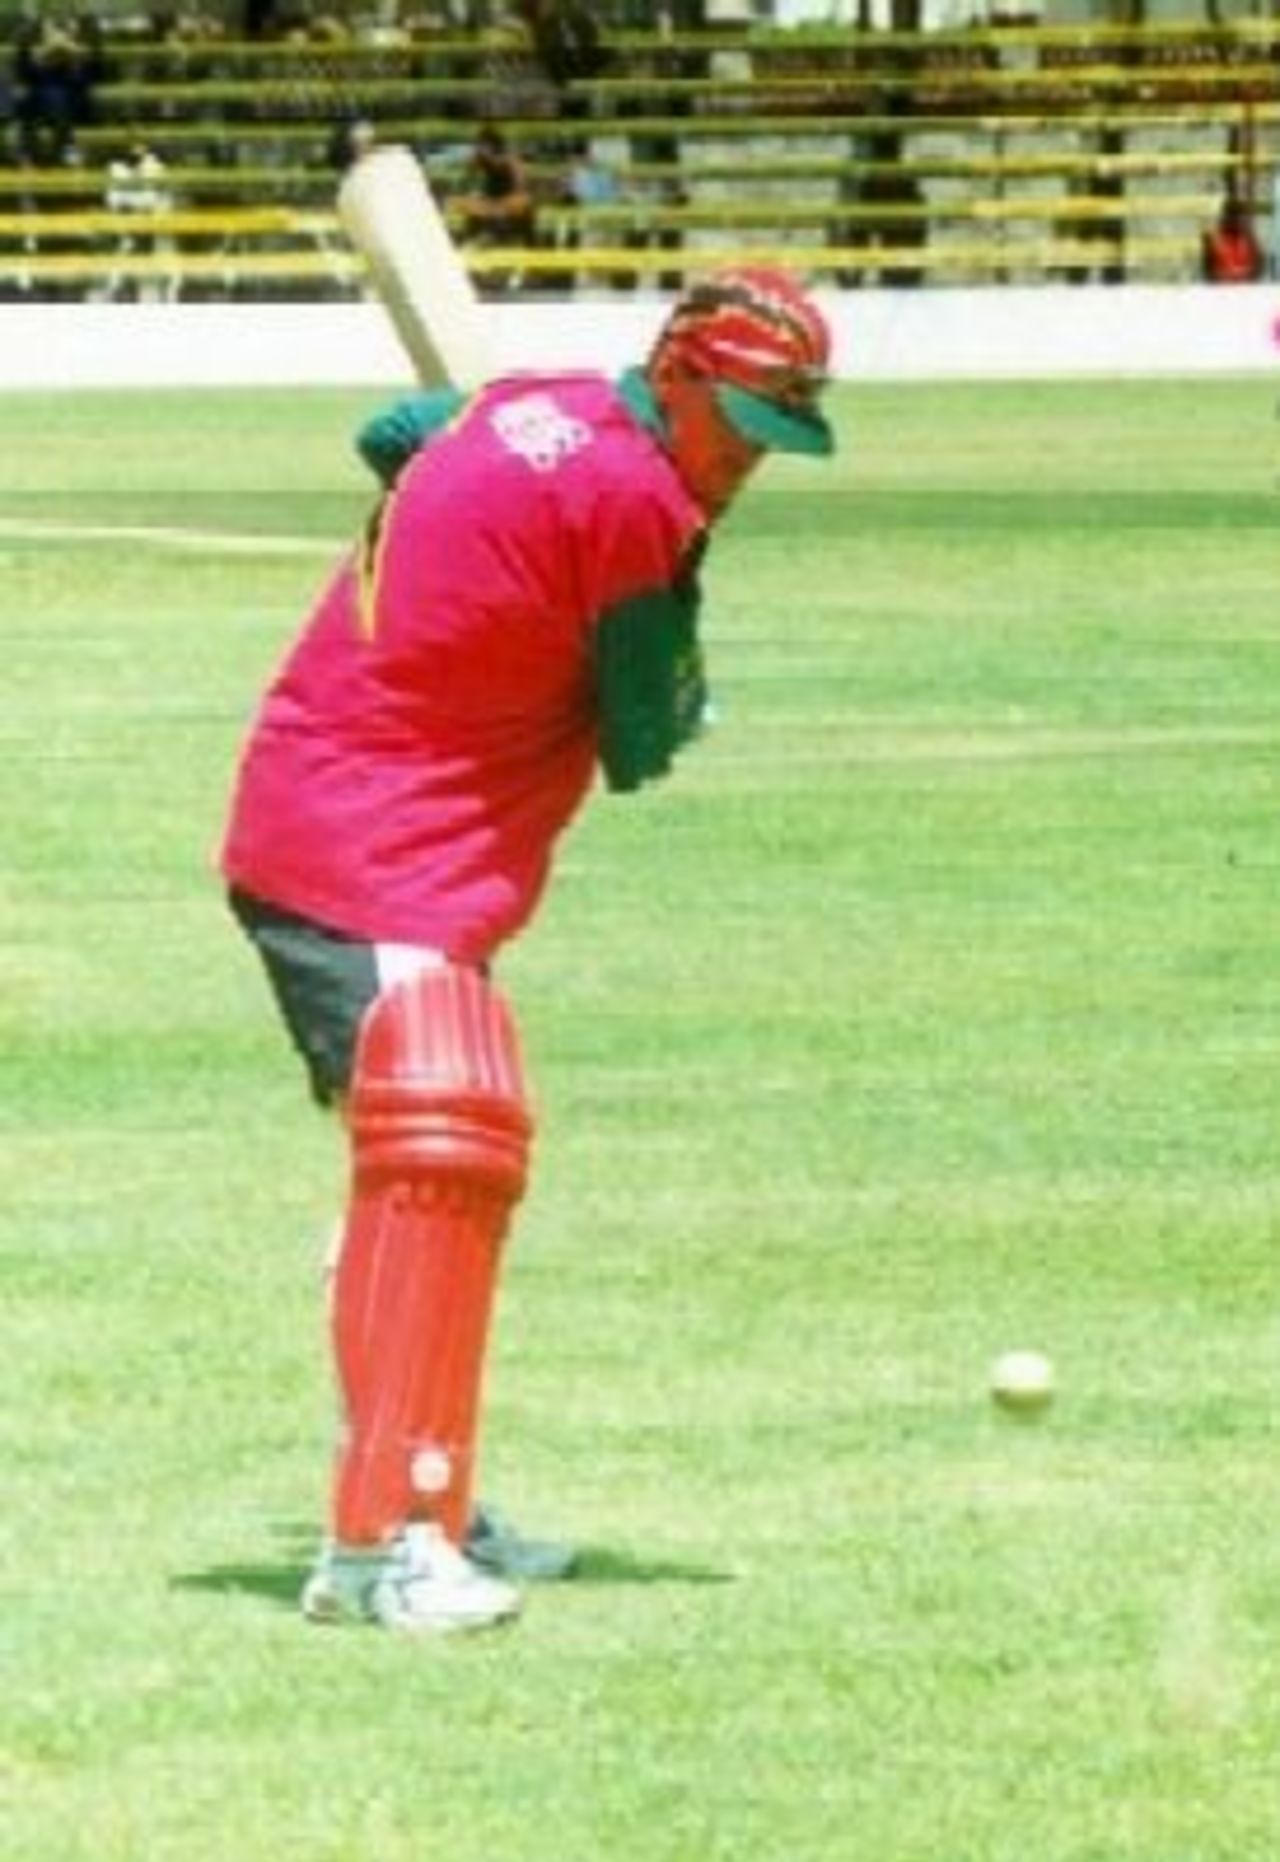 Zimbabwe's batsman warming up for their match against Kenya in the 1999 LG Cup in Nairobi, Kenya